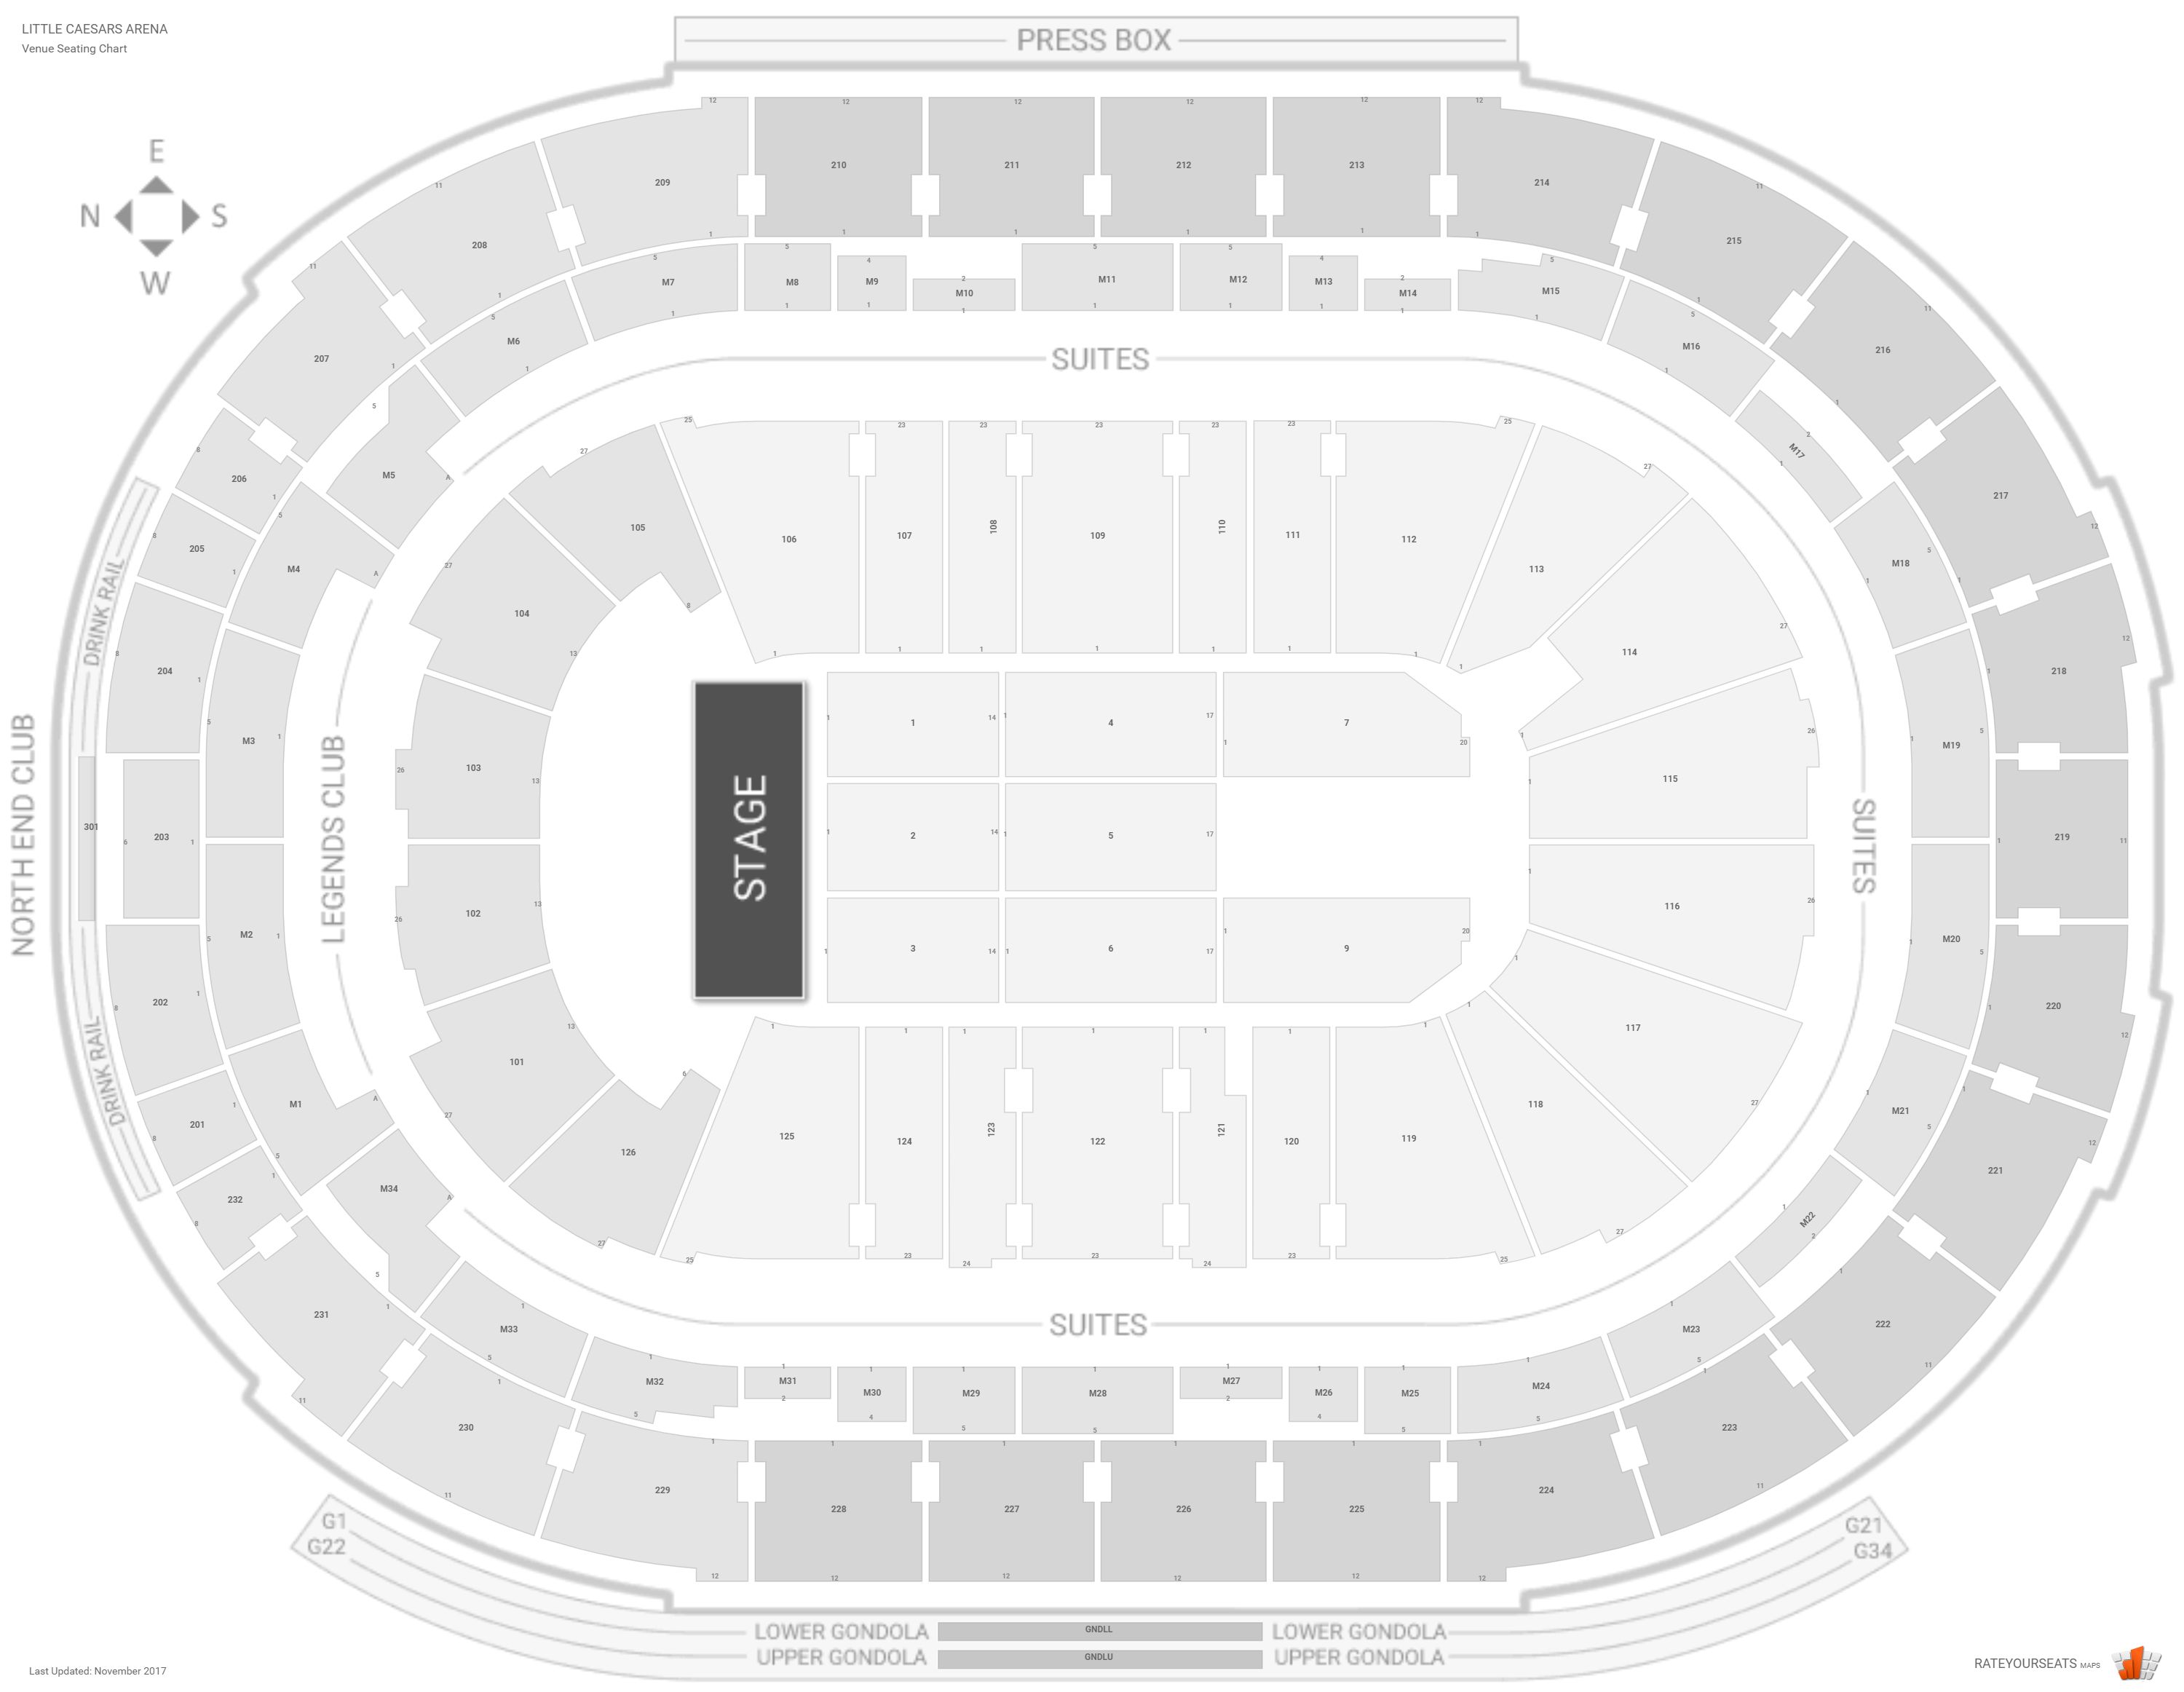 Little Caesars Arena Virtual Seating Chart Concert